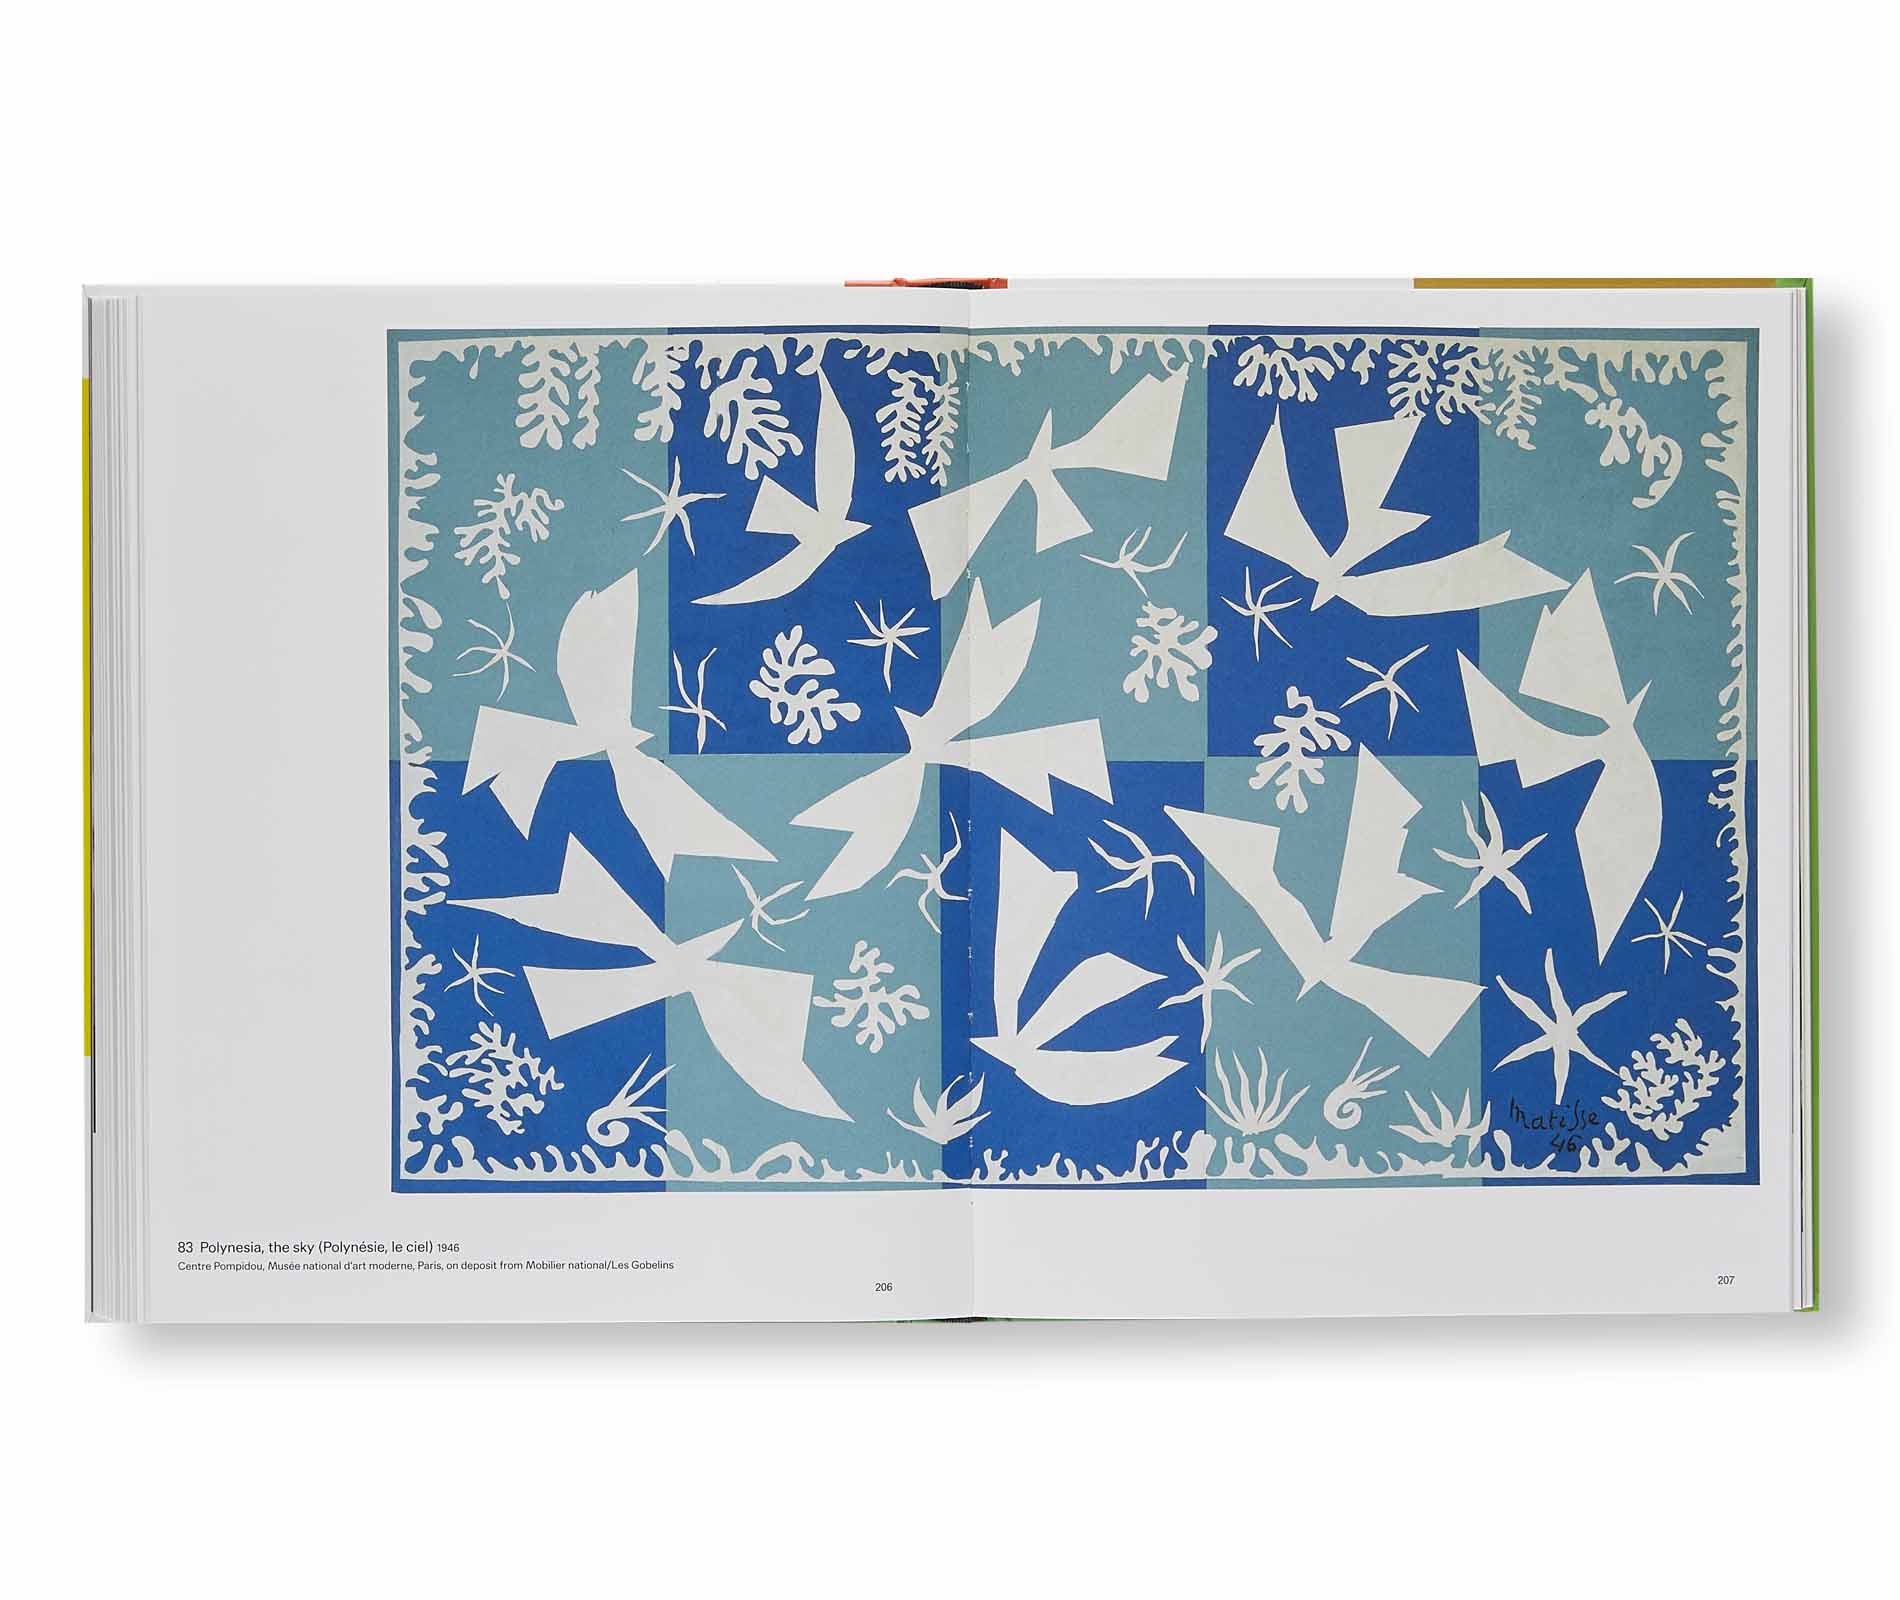 LIFE & SPIRIT: MASTERPIECES FROM THE CENTRE POMPIDOU, PARIS by Henri Matisse